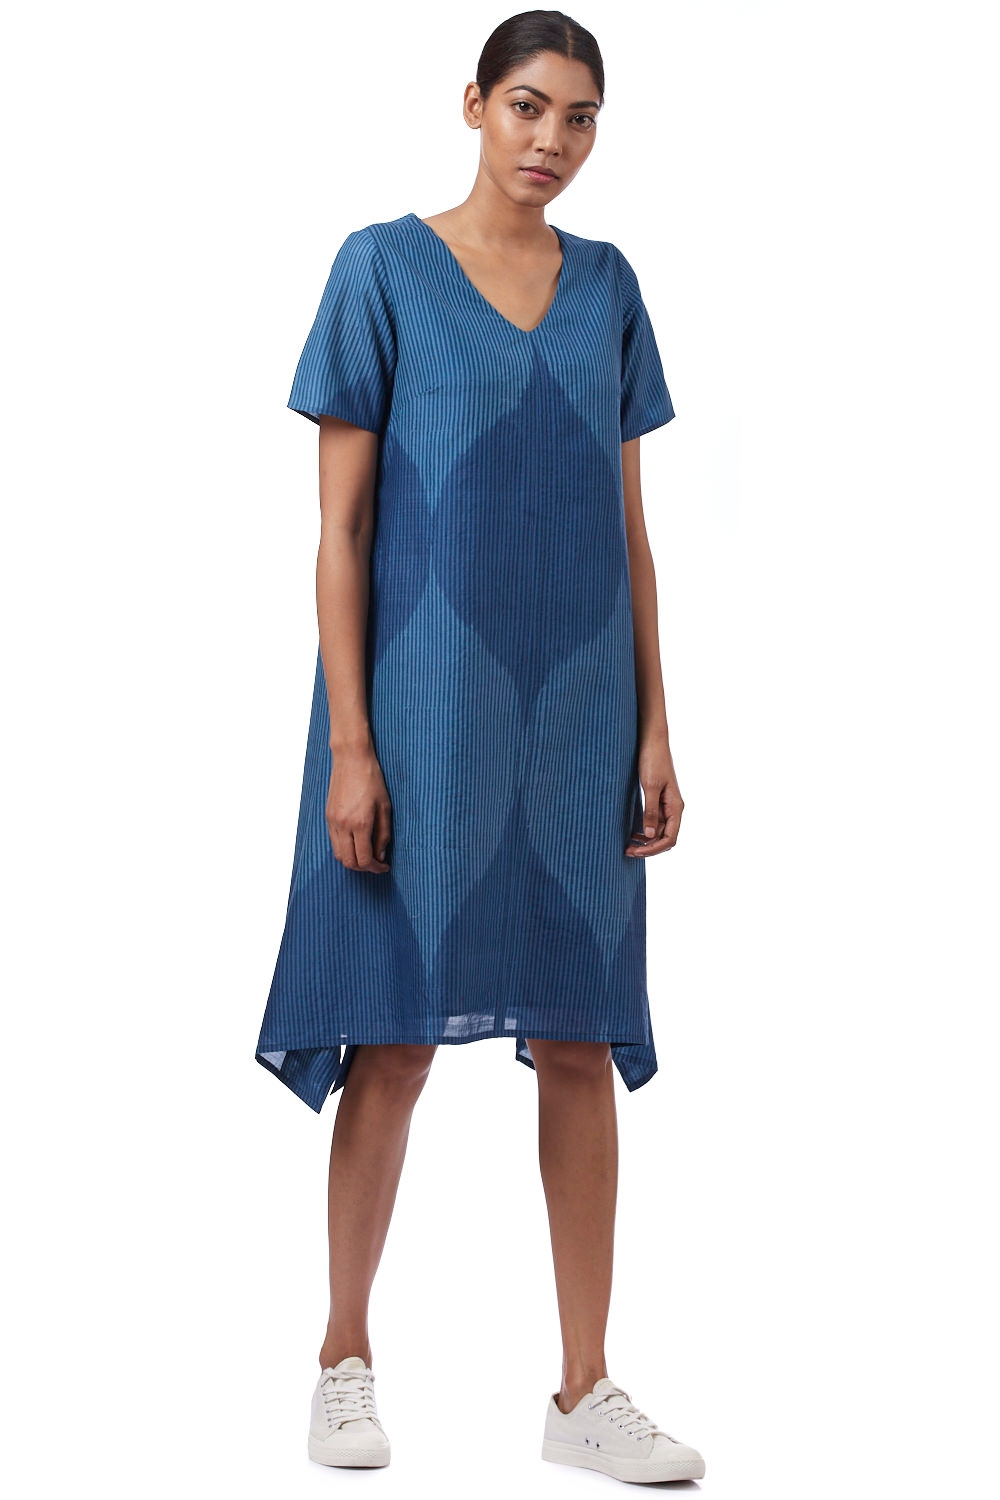 ABRAHAM AND THAKORE | Handwoven Ikat Block Print Stripe Kite Dress